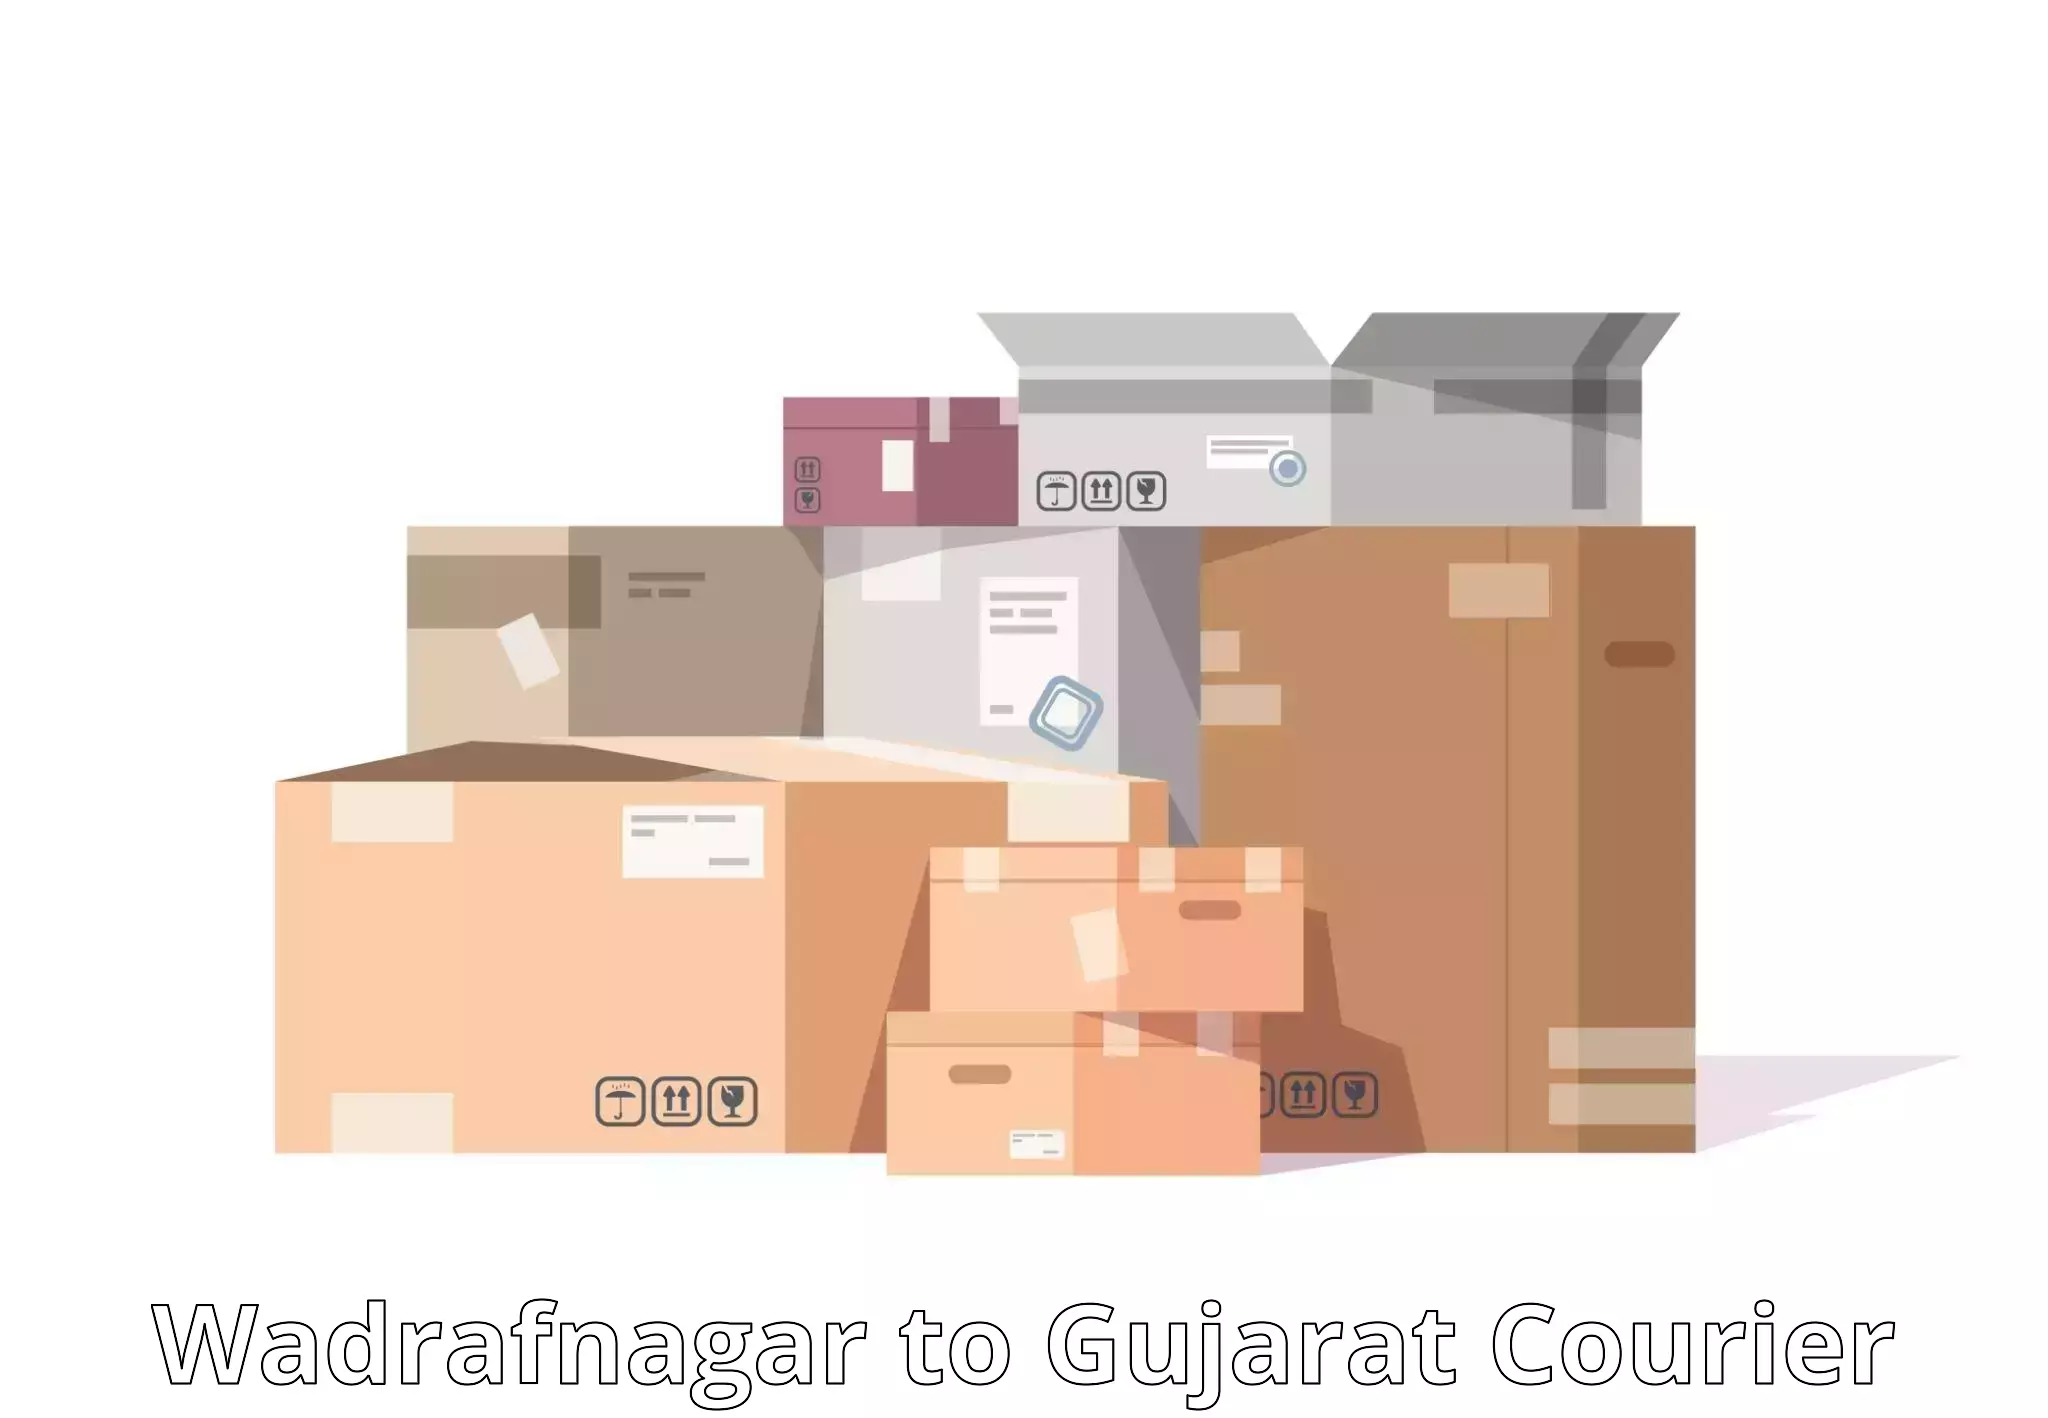 Courier service efficiency Wadrafnagar to Gujarat